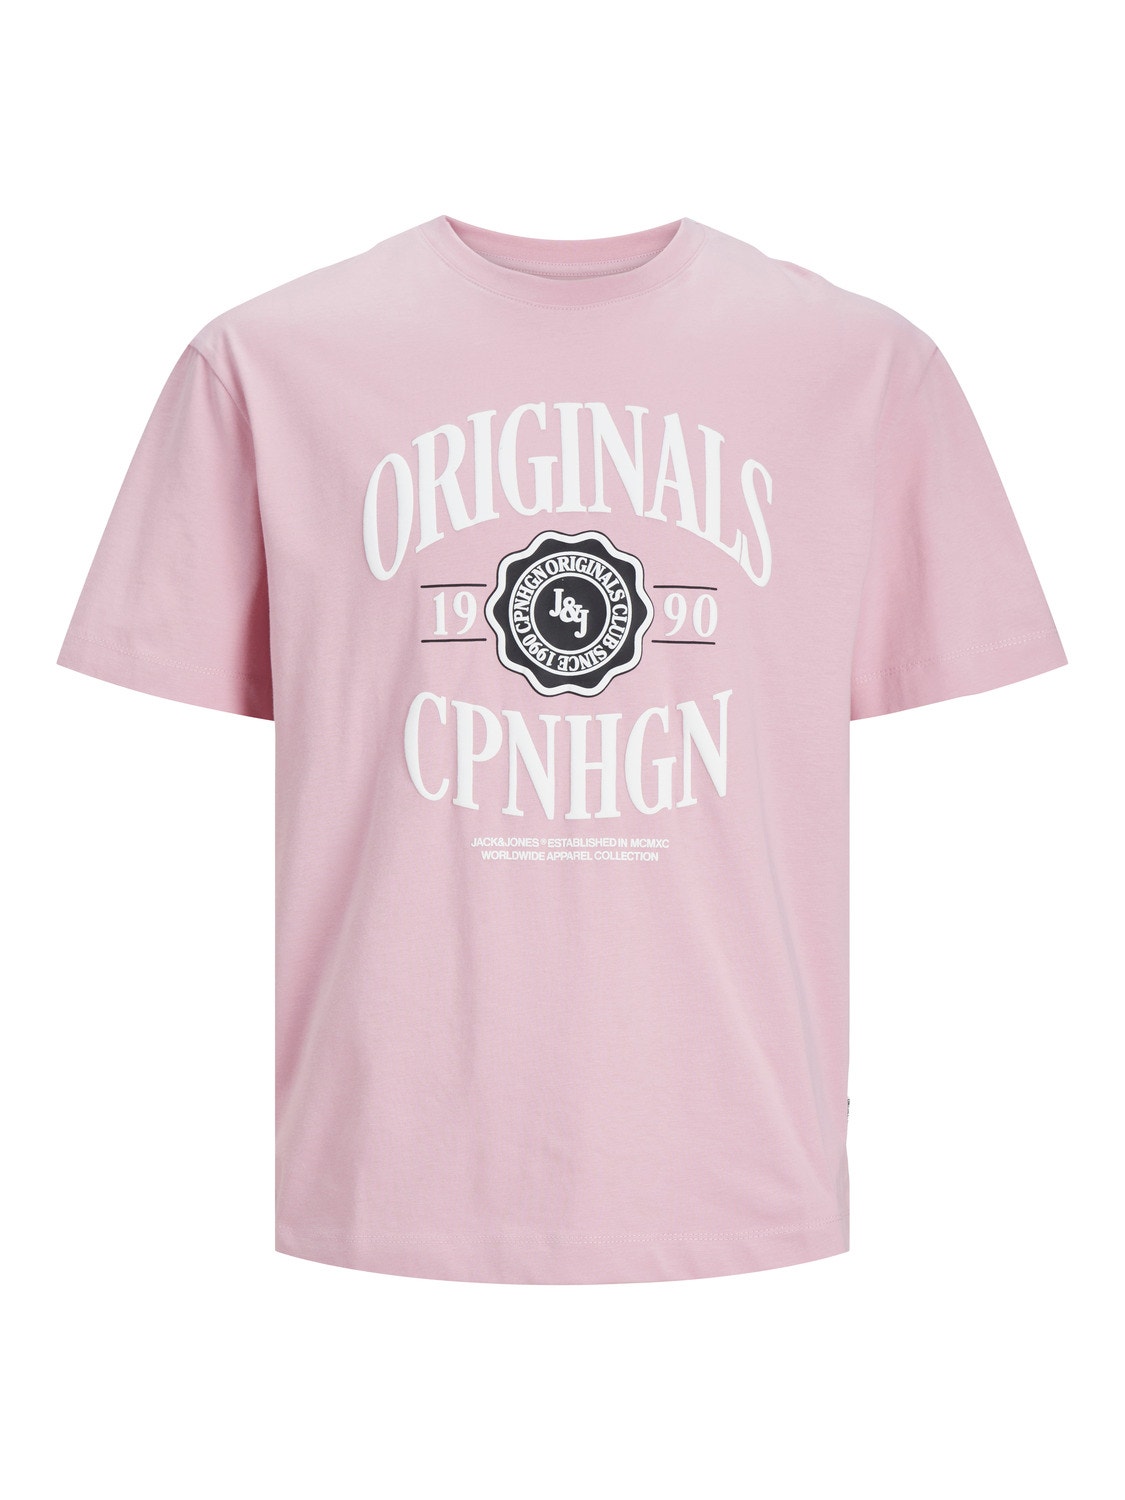 Jack & Jones T-shirt Estampar Decote Redondo -Pink Nectar - 12251899